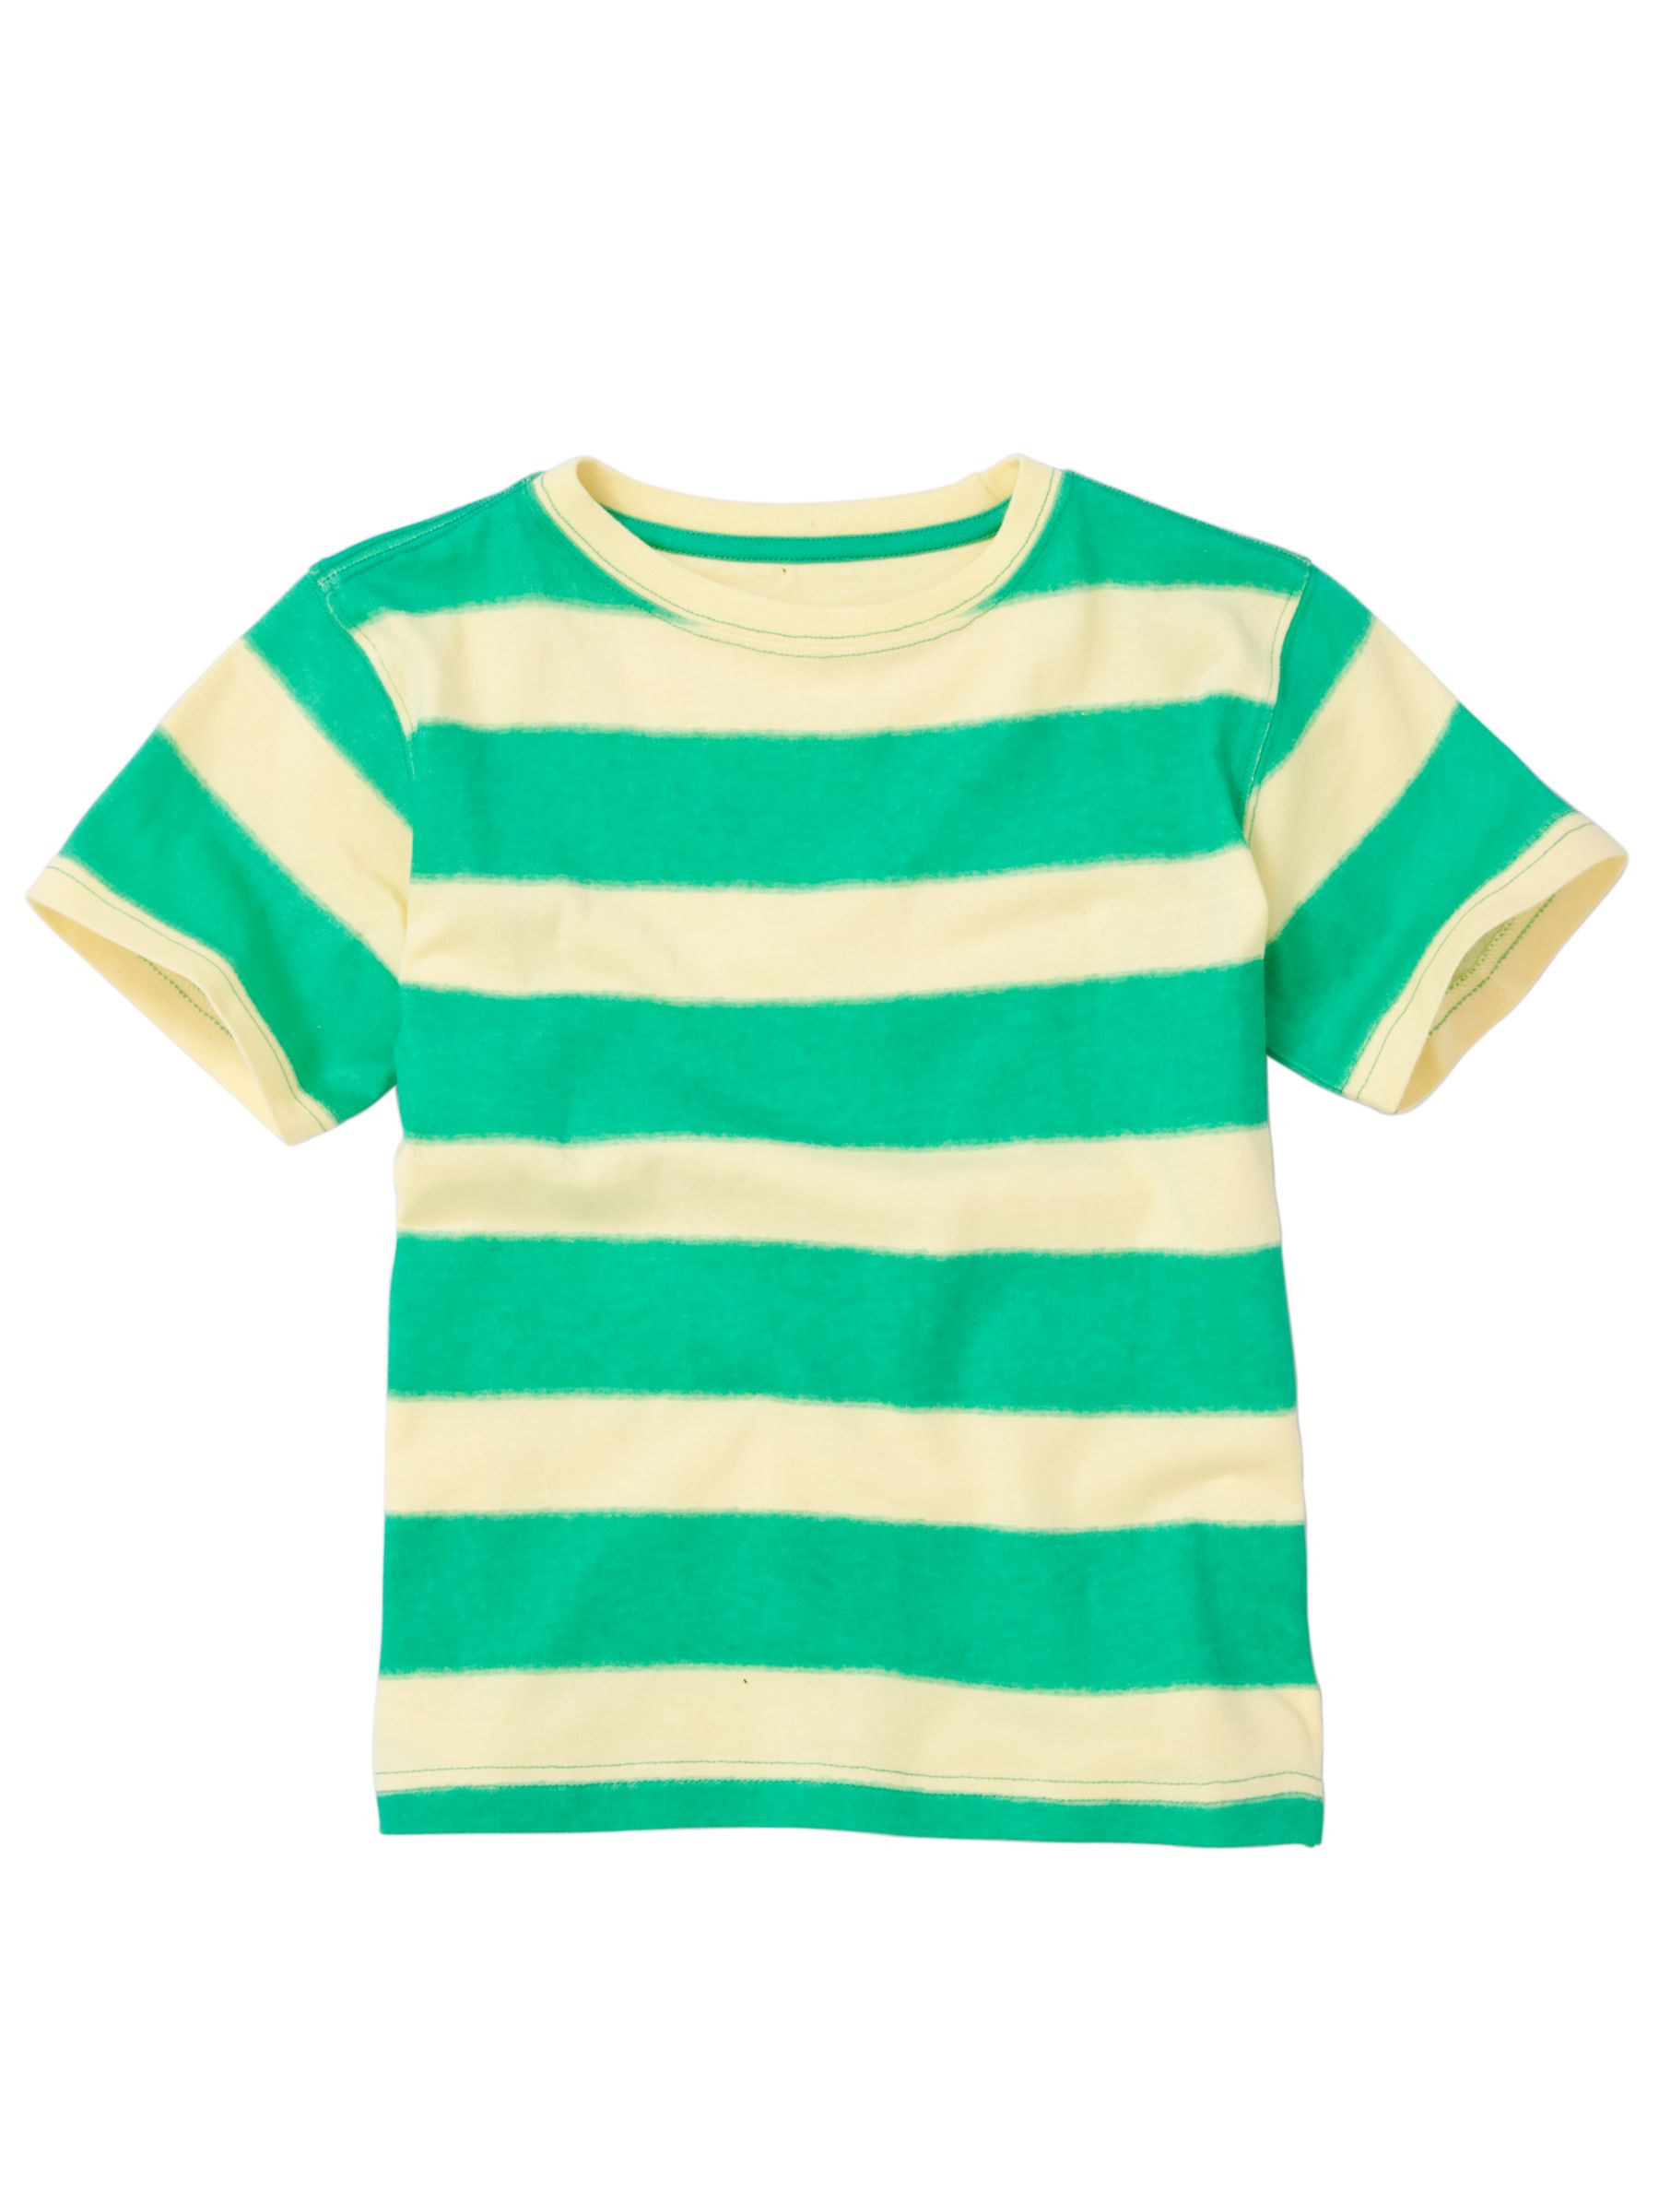 Block Stripe T-Shirt, Yellow/Green